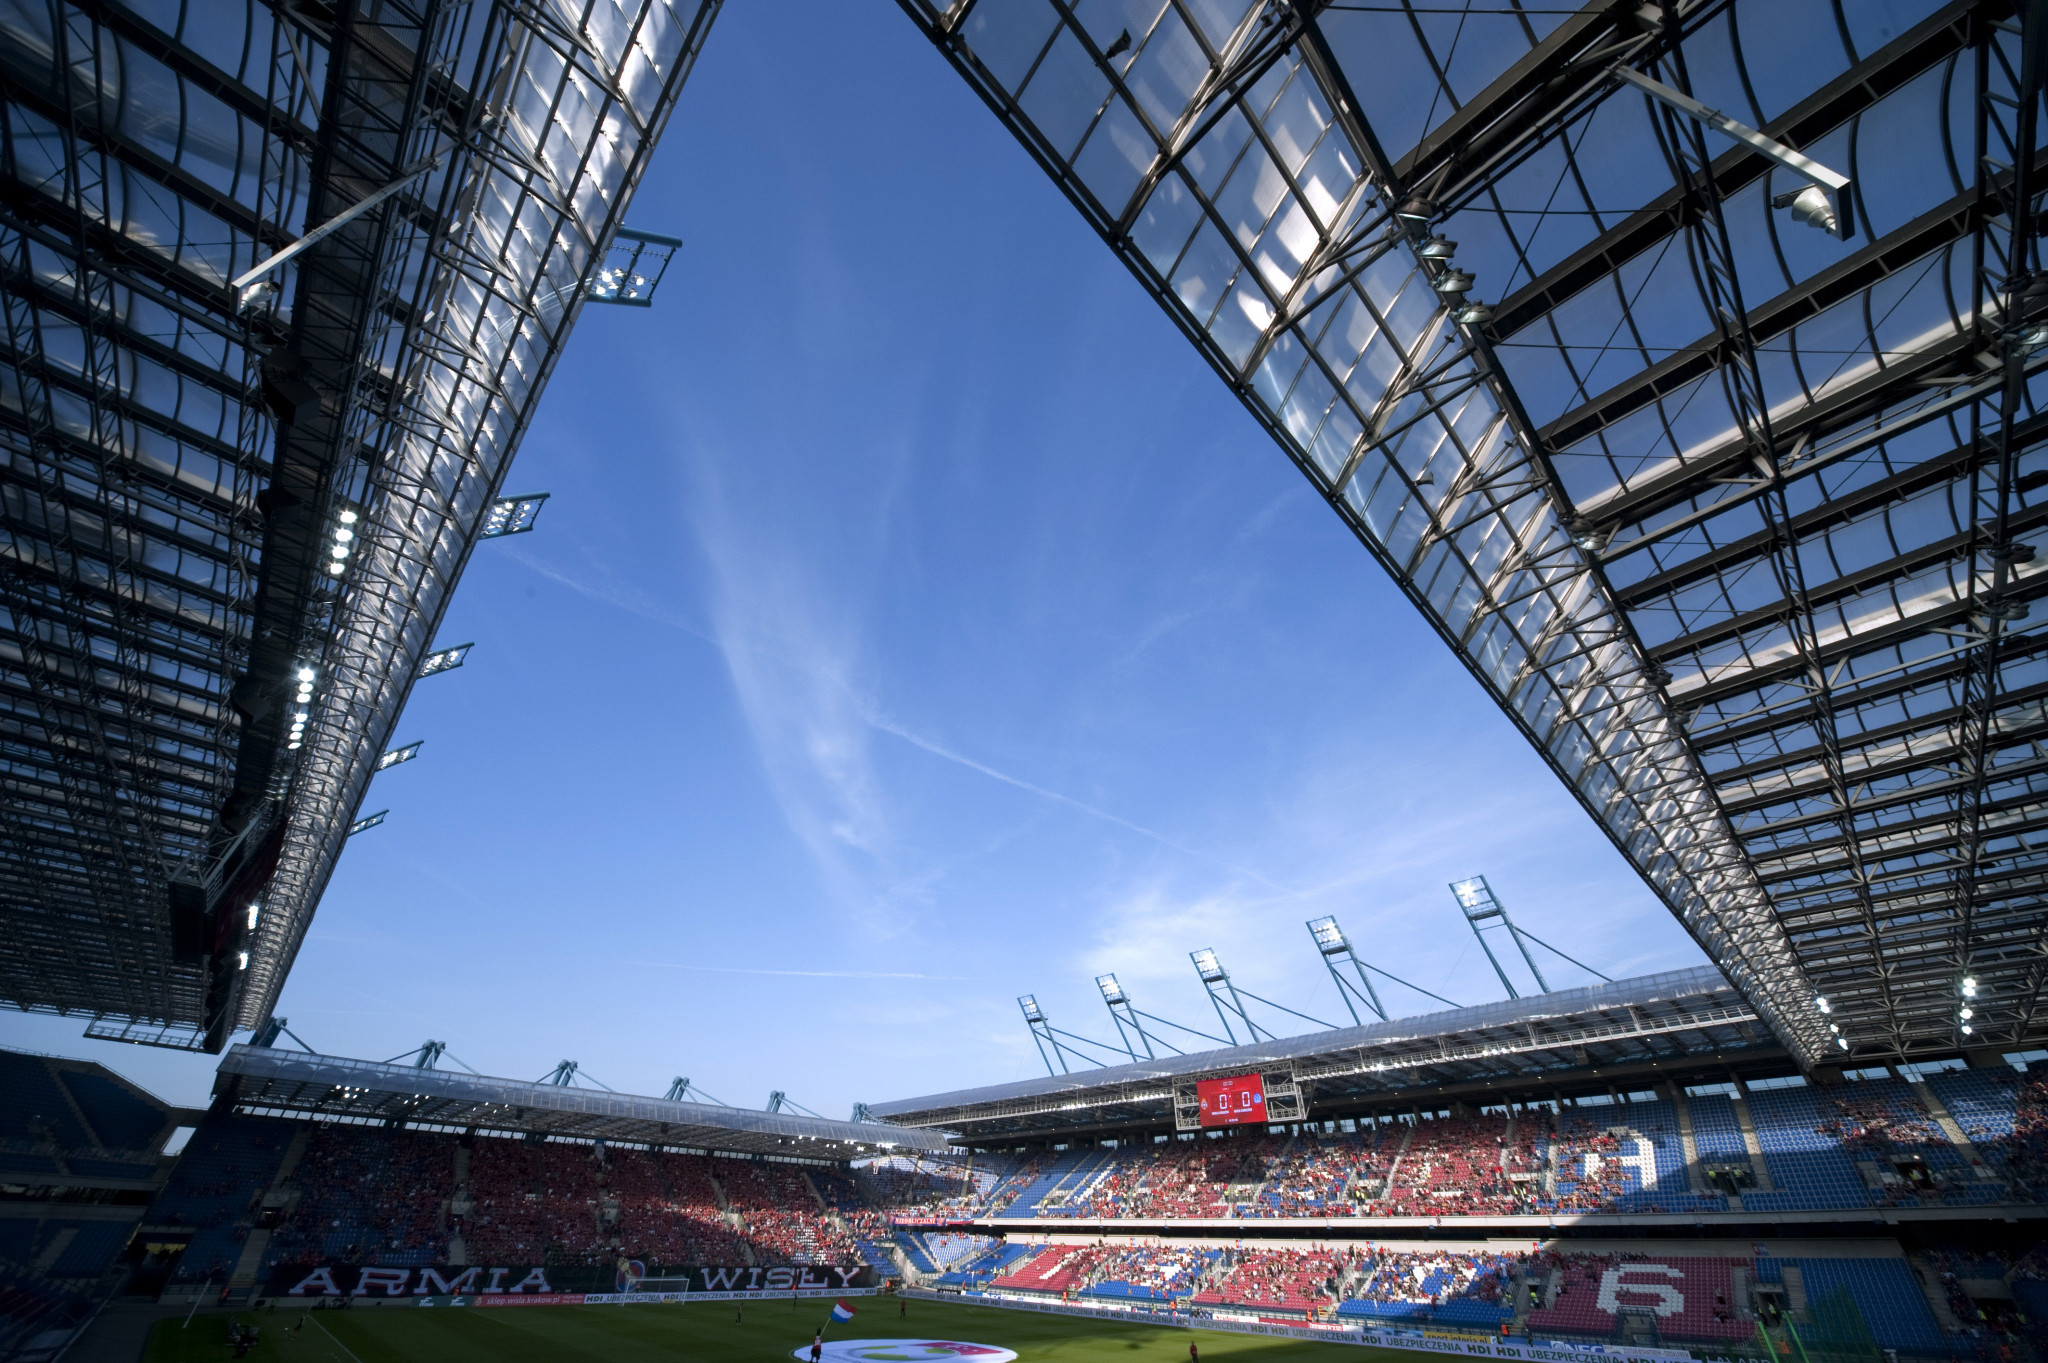 Kraków-Małopolska 2023 European Games Opening Ceremony stadium redevelopment plans still on hold